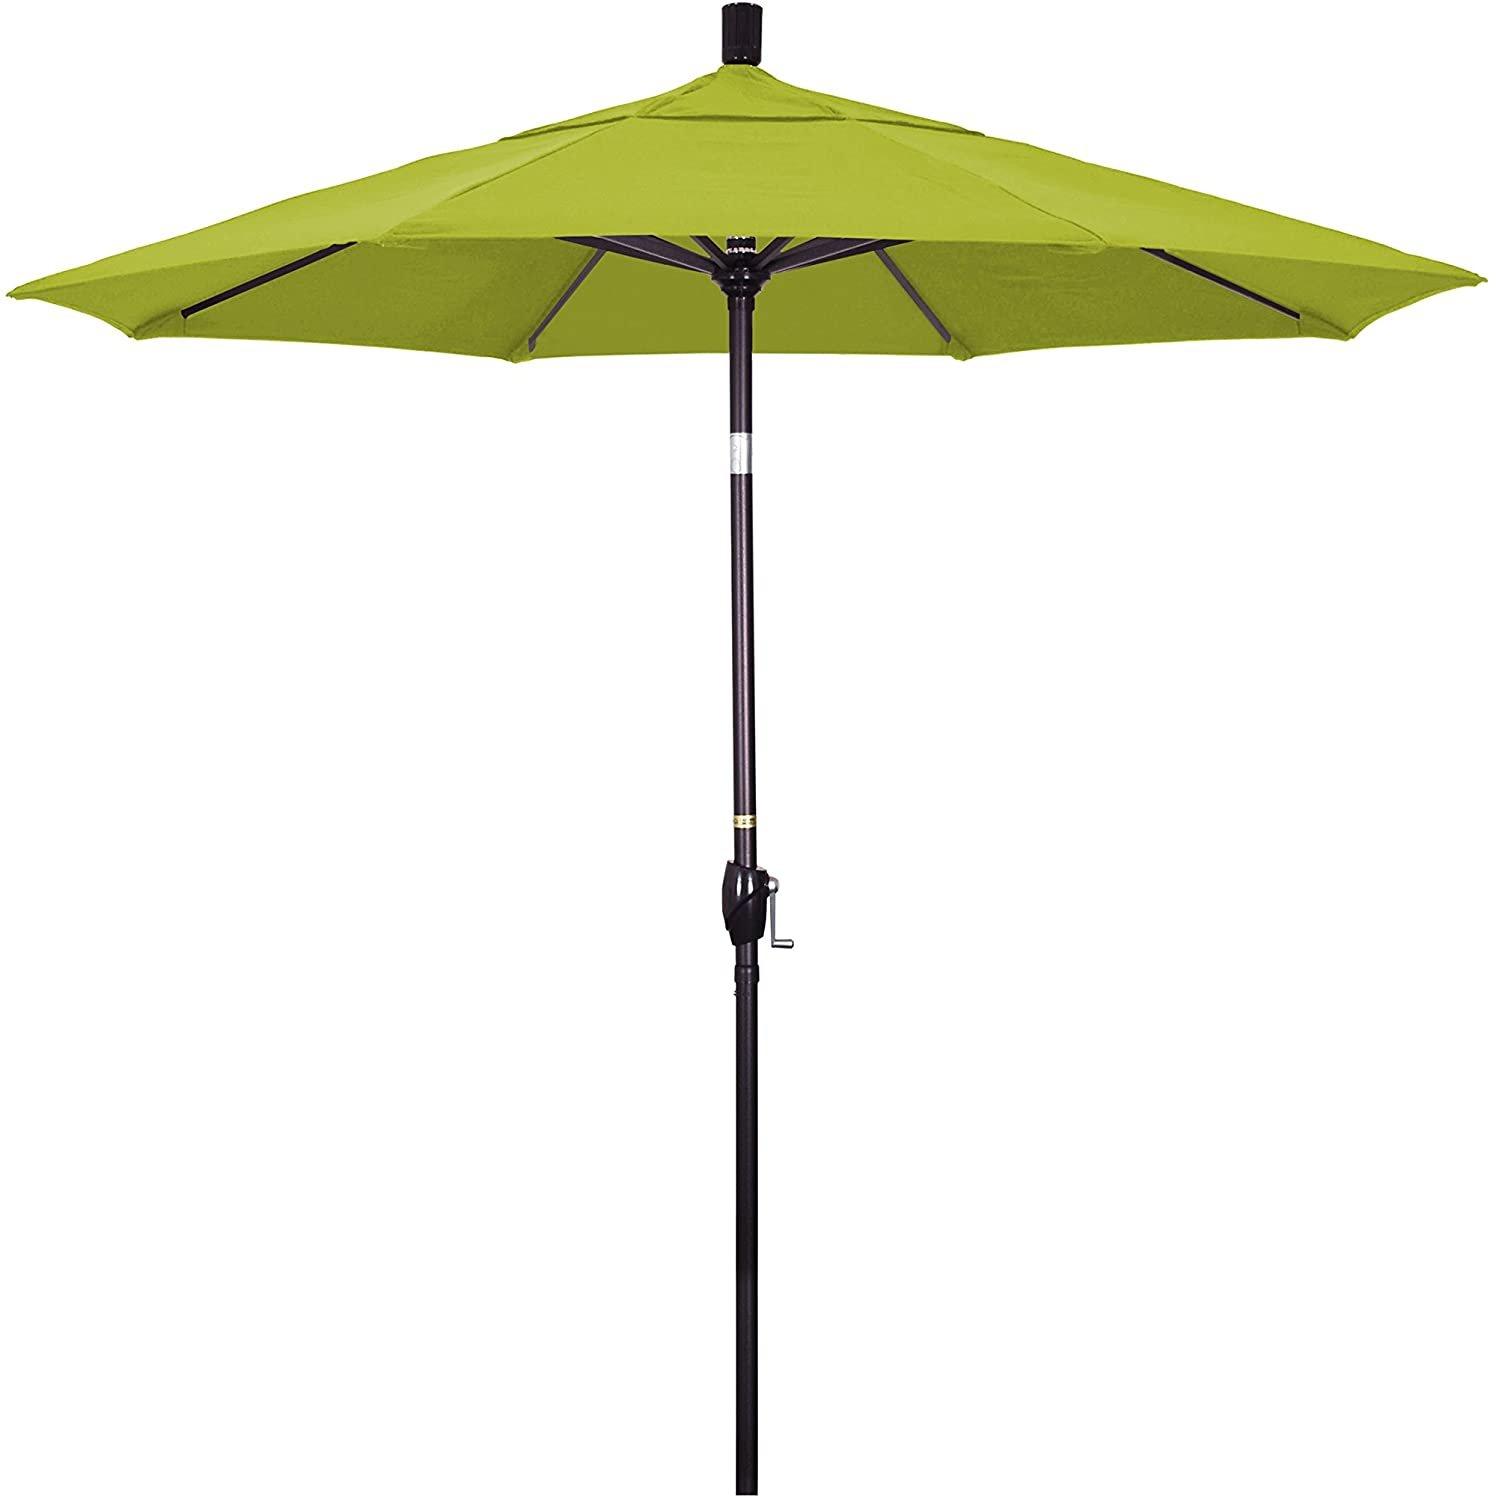 7.5 ft Market Umbrella Bronze/Red